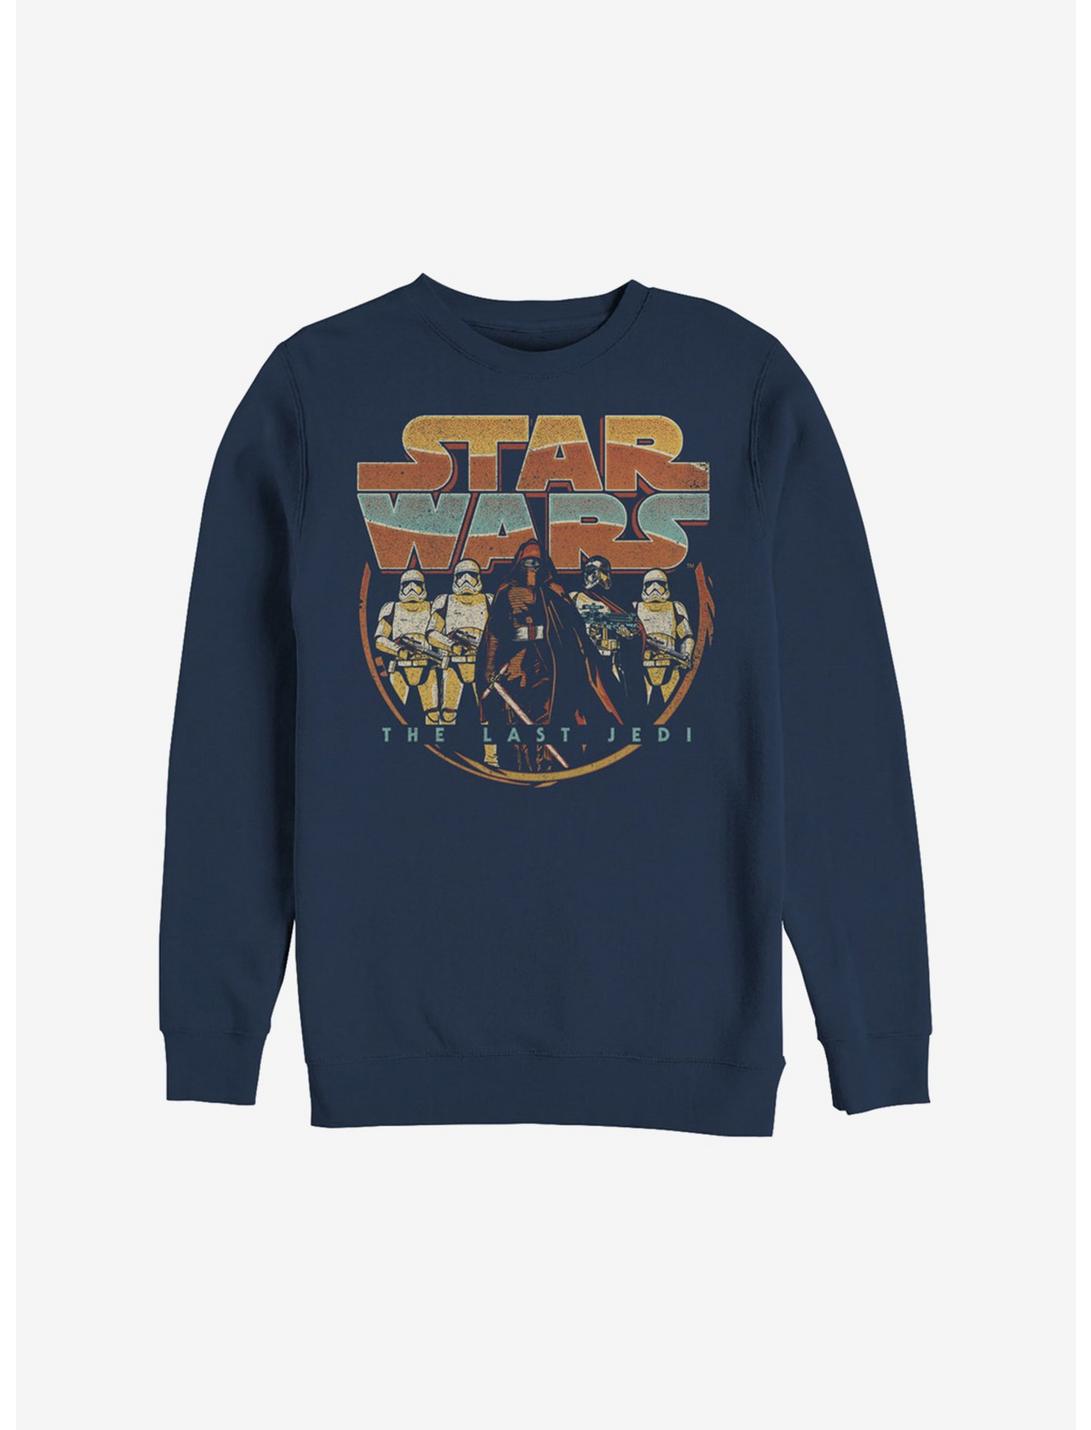 Star Wars Episode VIII The Last Jedi Retro Style Sweatshirt, NAVY, hi-res